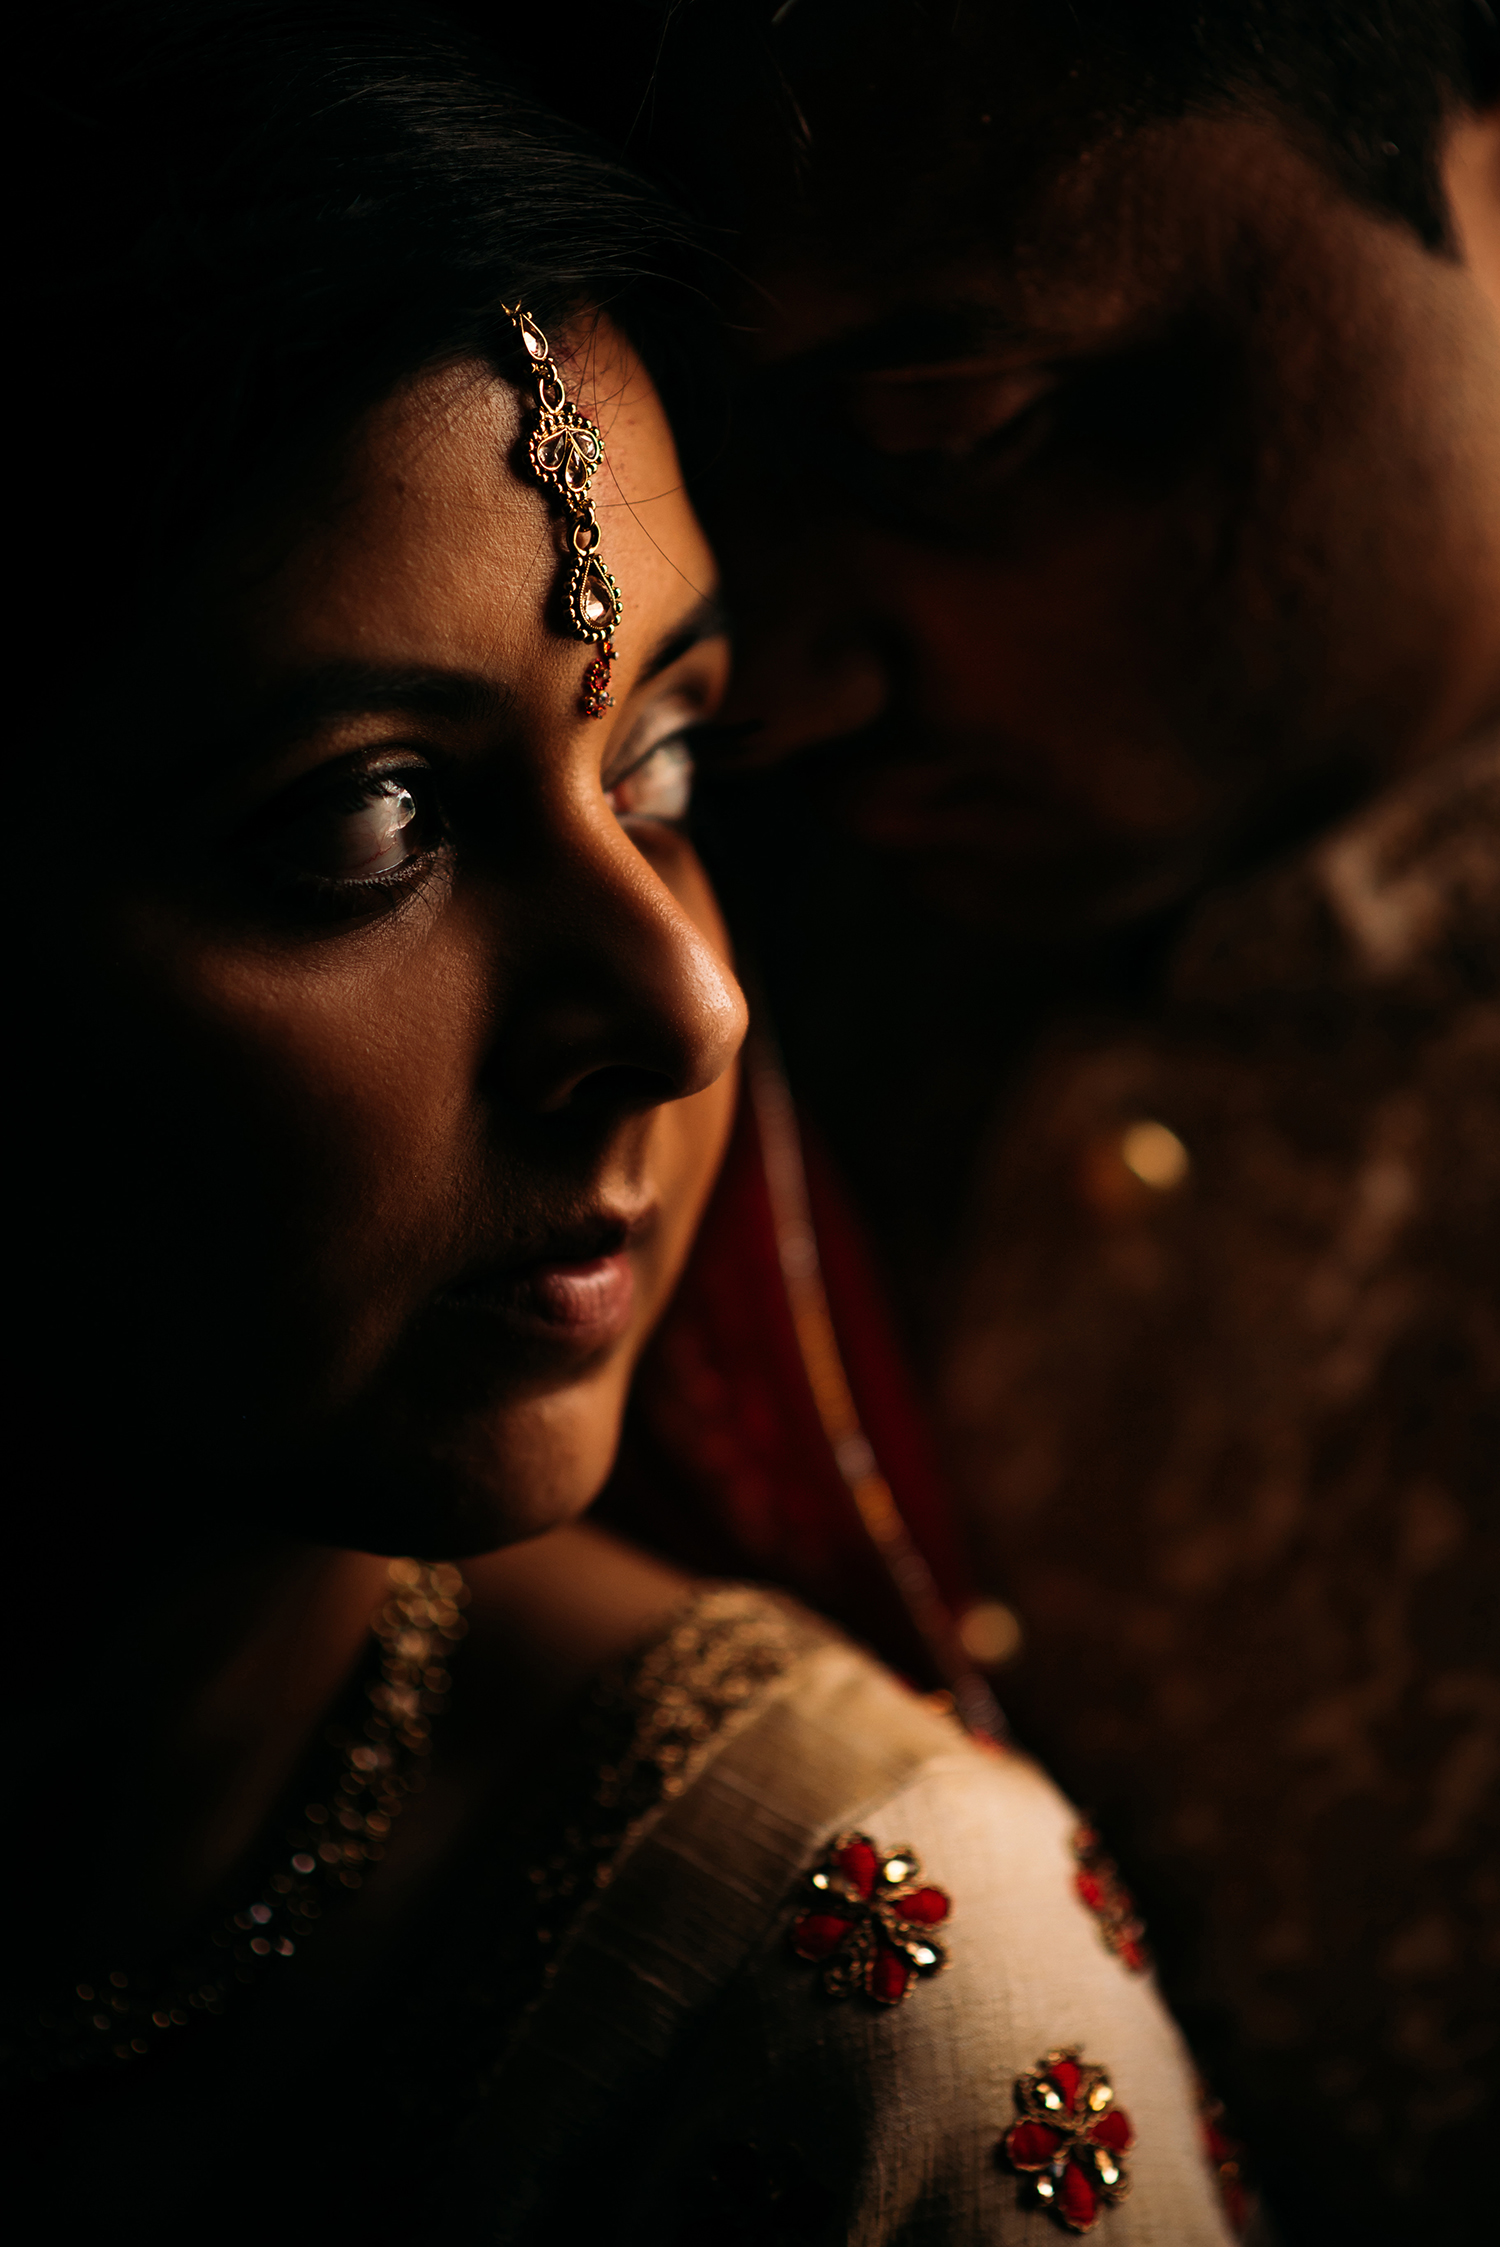  dark photo of bride and groom by brilliant window light 